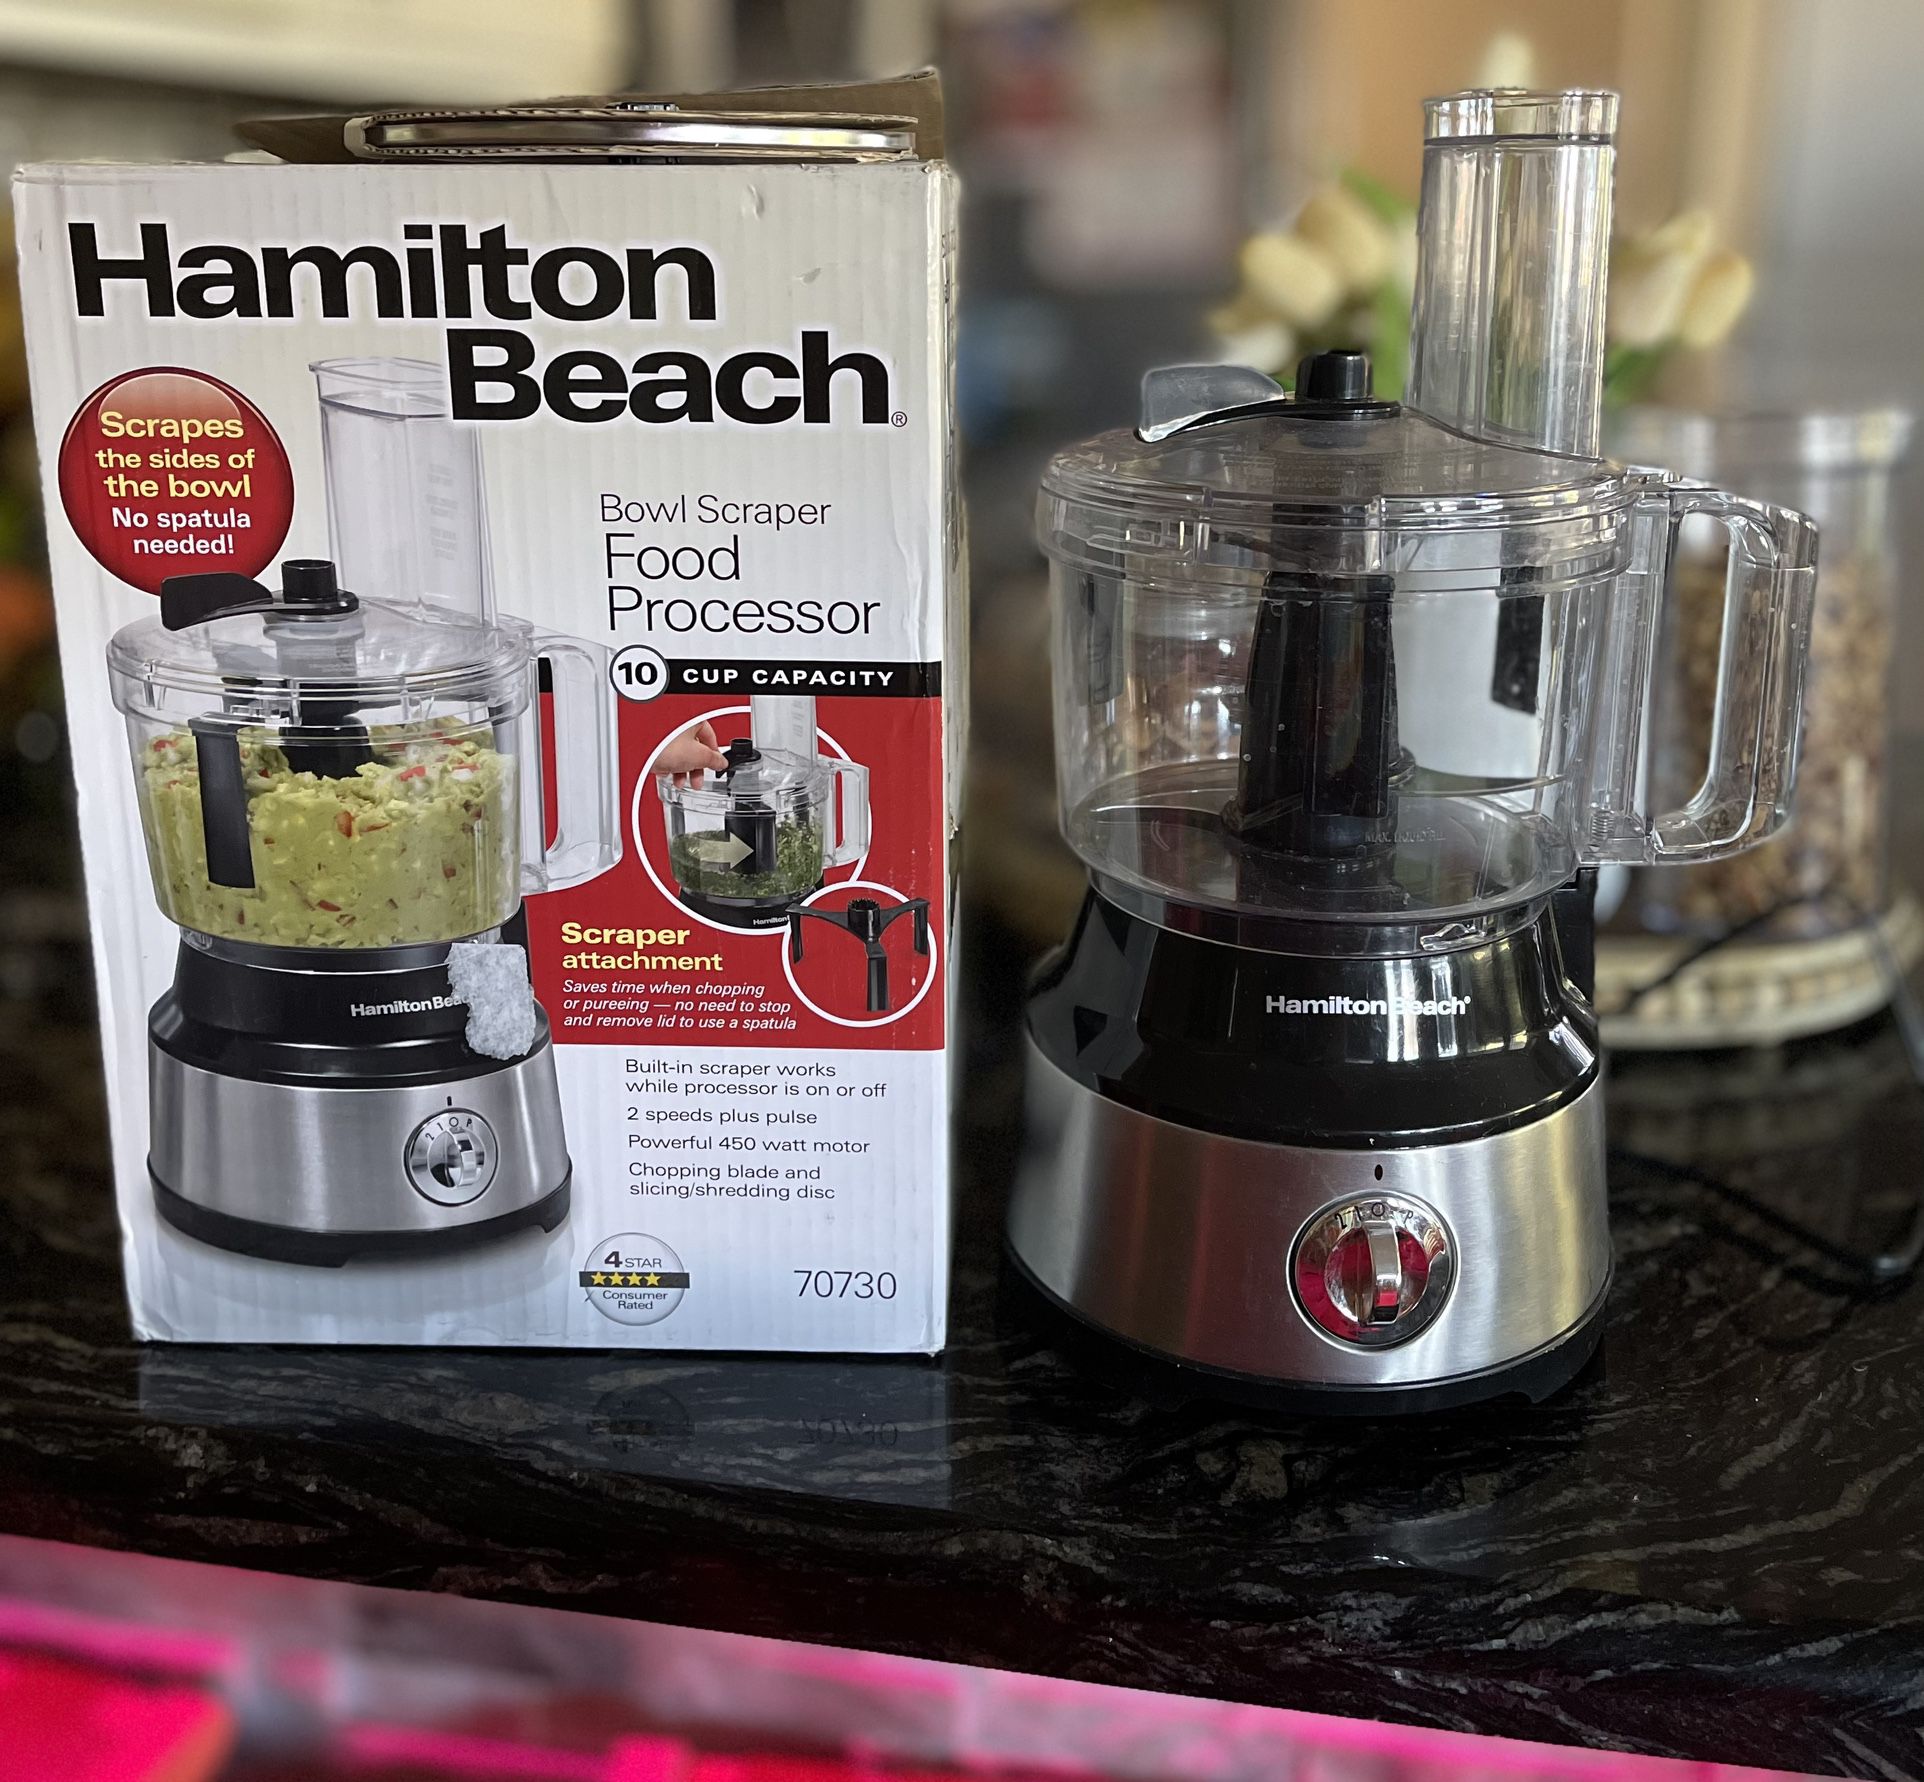 Hamilton Beach Food Processor, 10 Cup Capacity